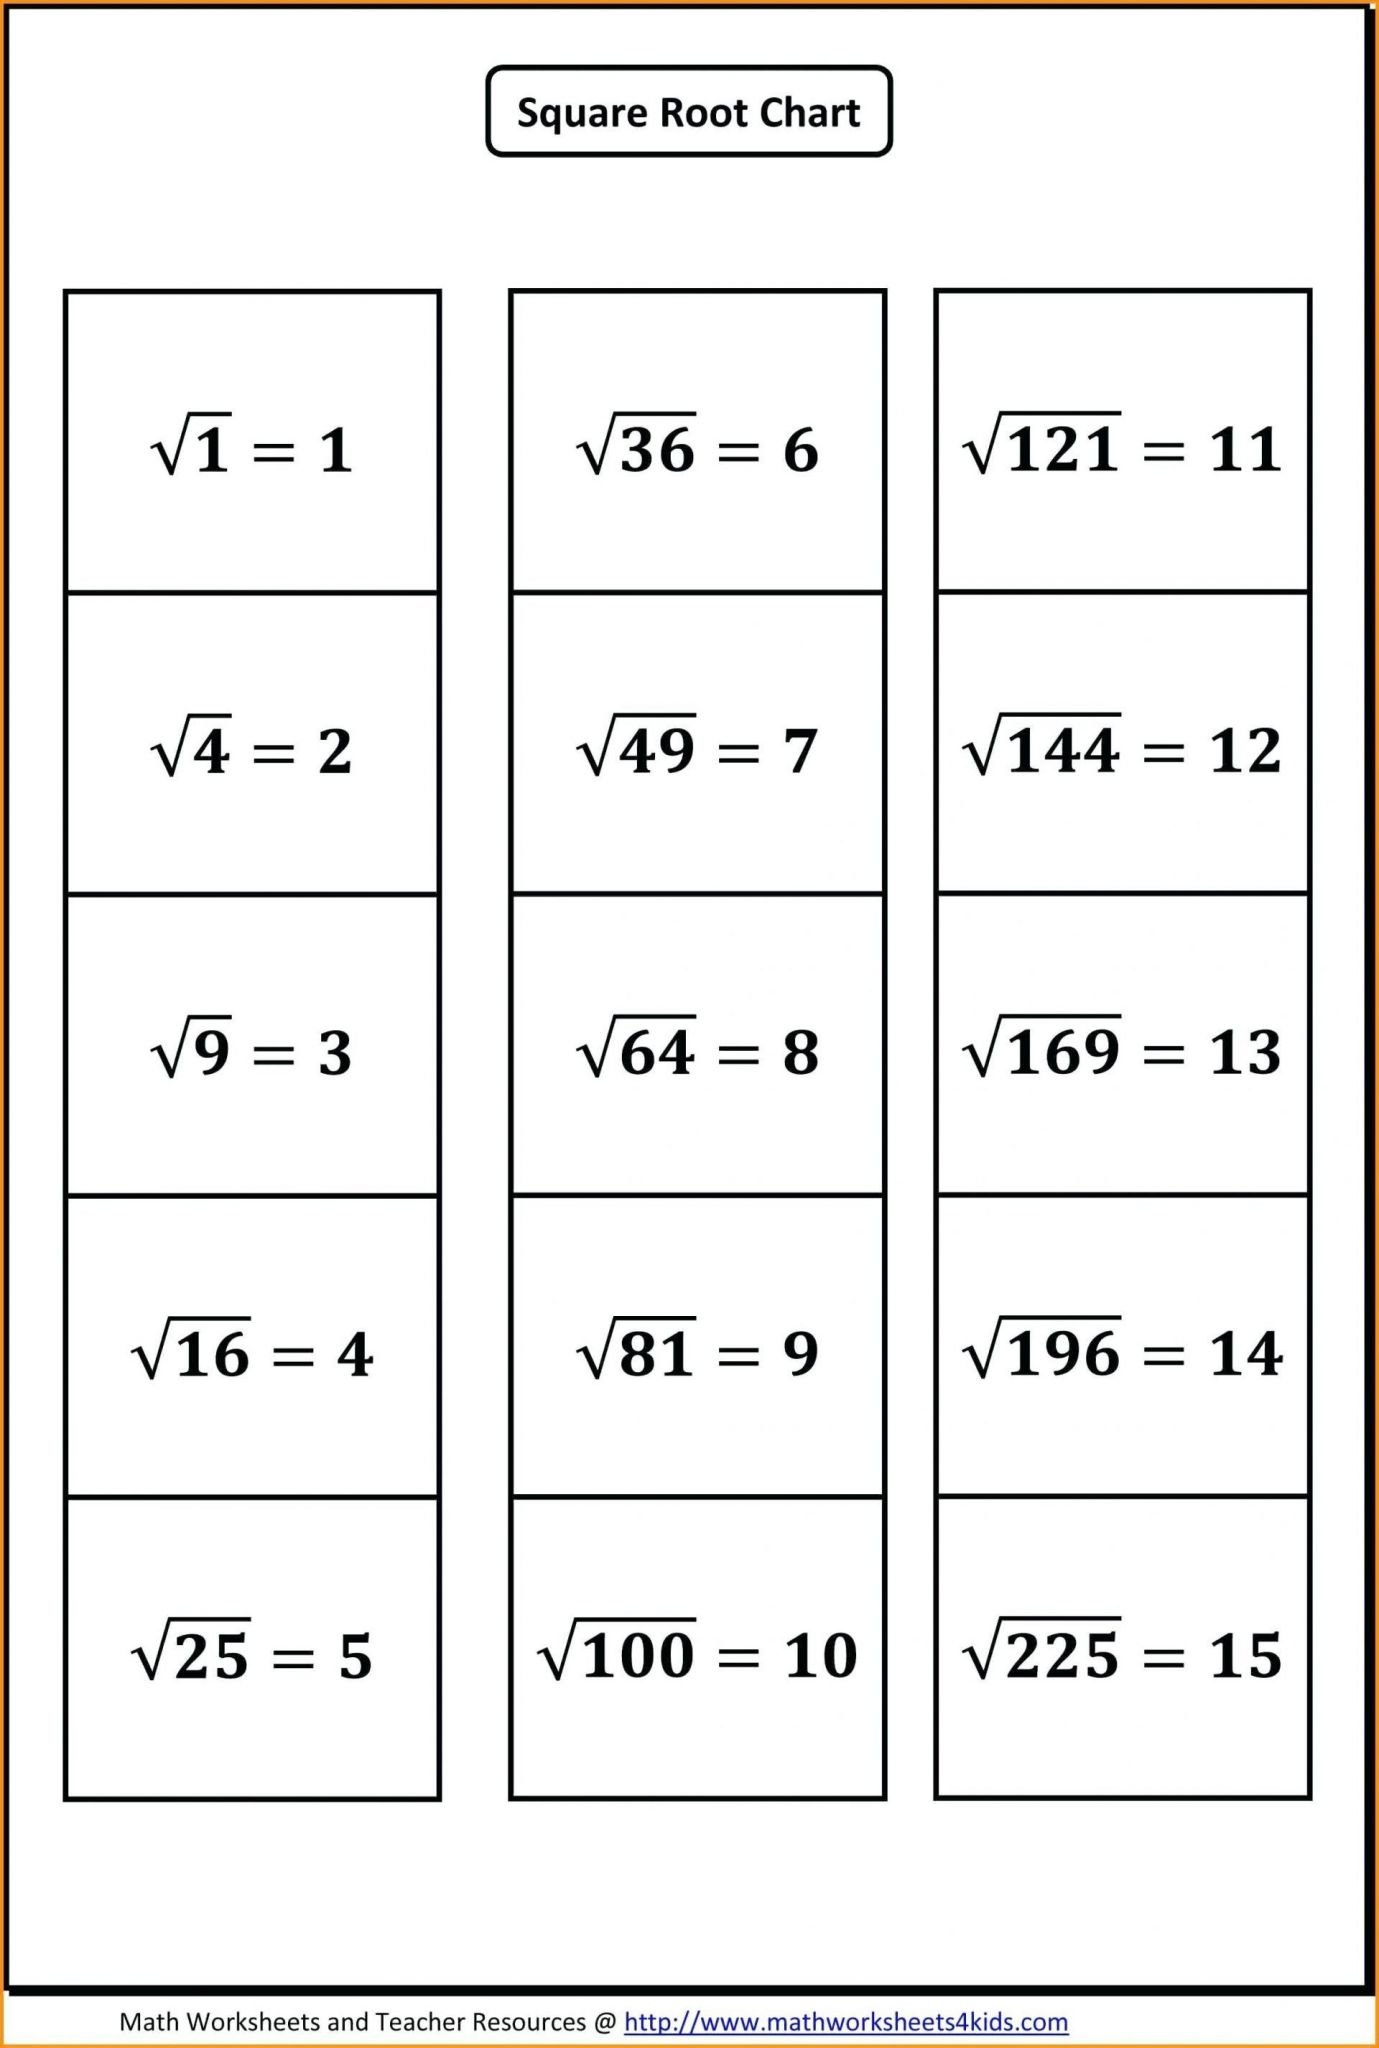 Square Roots Of Negative Numbers Worksheet  Briefencounters Also Square Roots Of Negative Numbers Worksheet